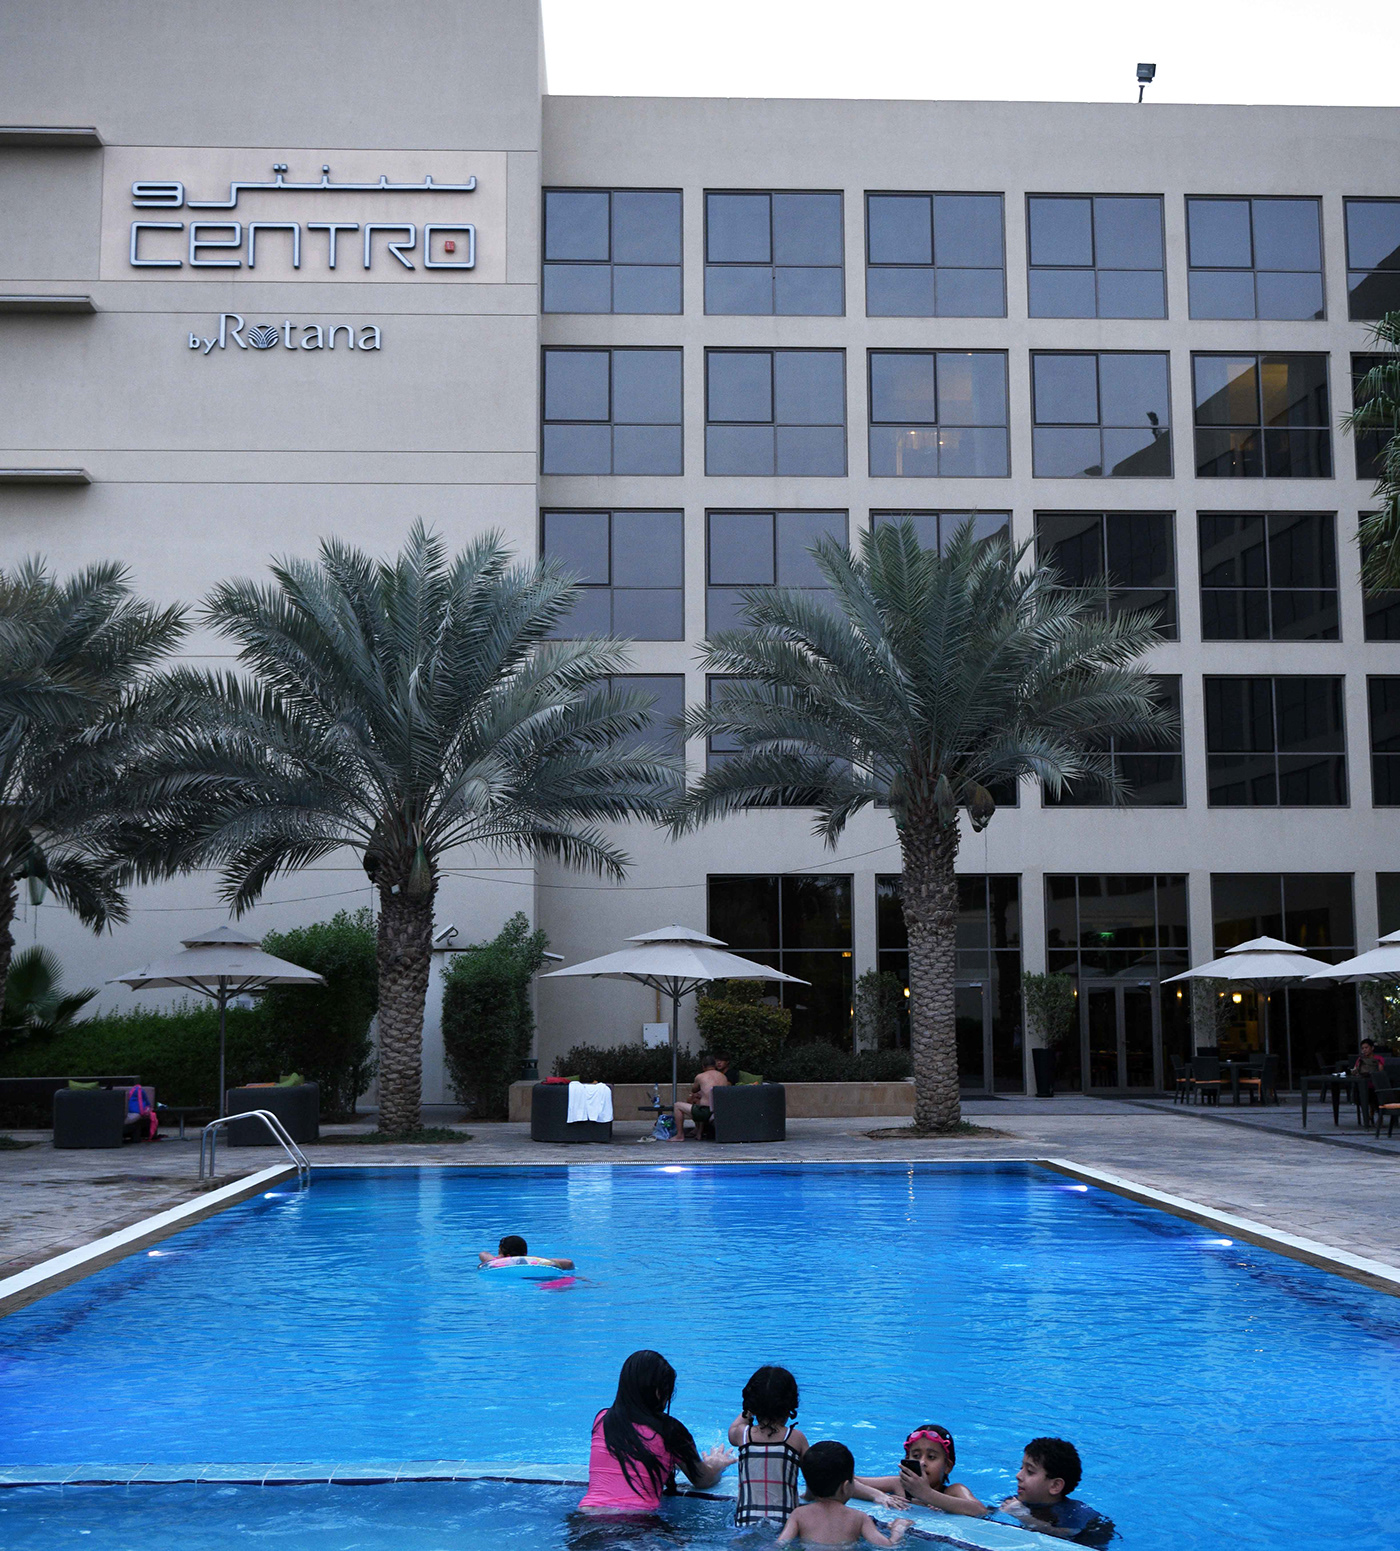 Travel traveller photographer sharjah UAE middle east hotel INFLUENCER Nikon